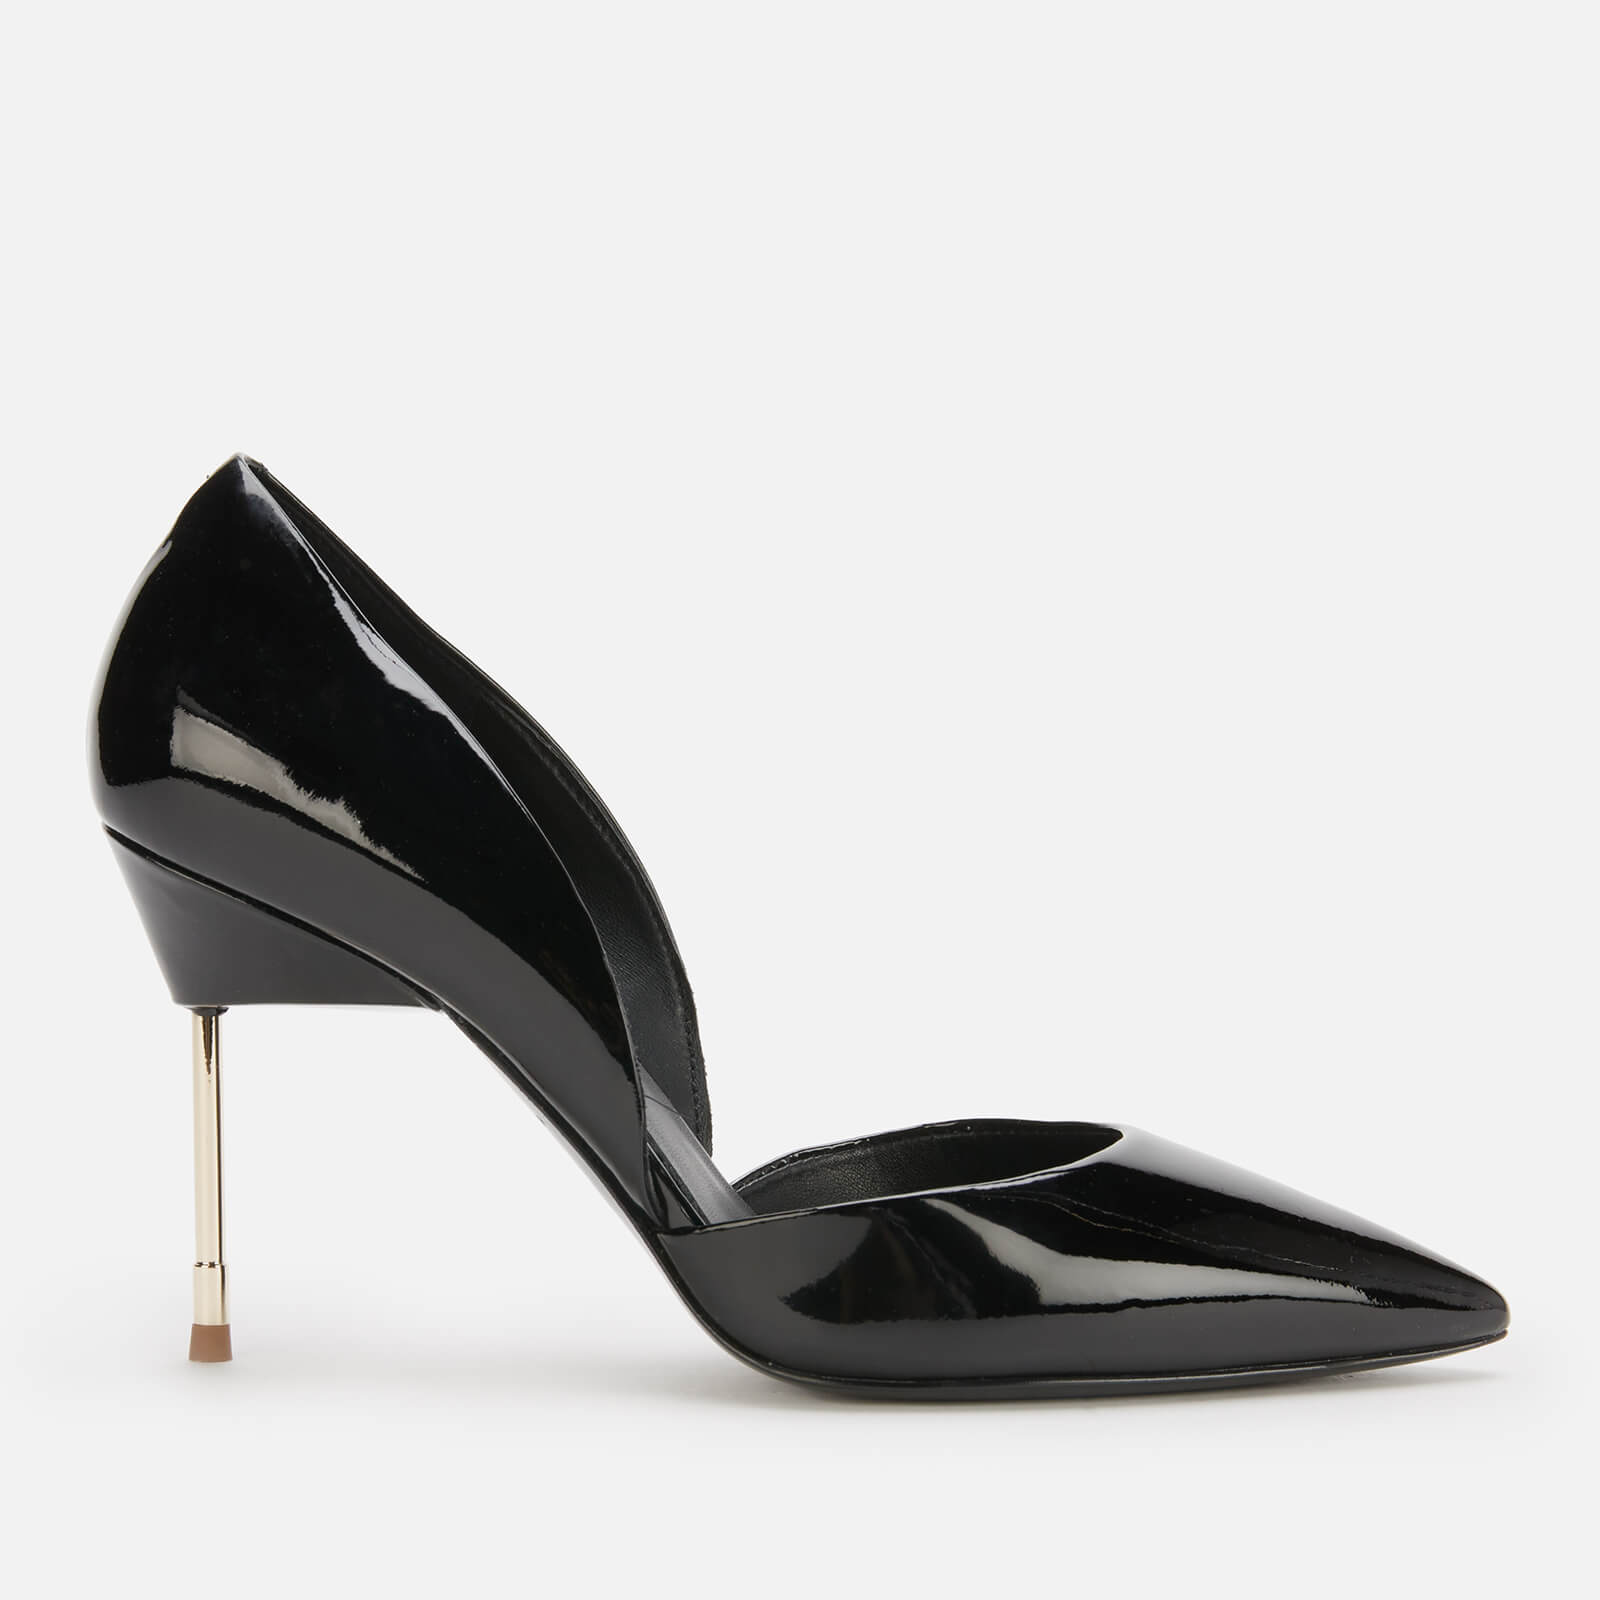 Kurt Geiger London Women's Bond 90 Patent Court Shoes - Black - UK 3